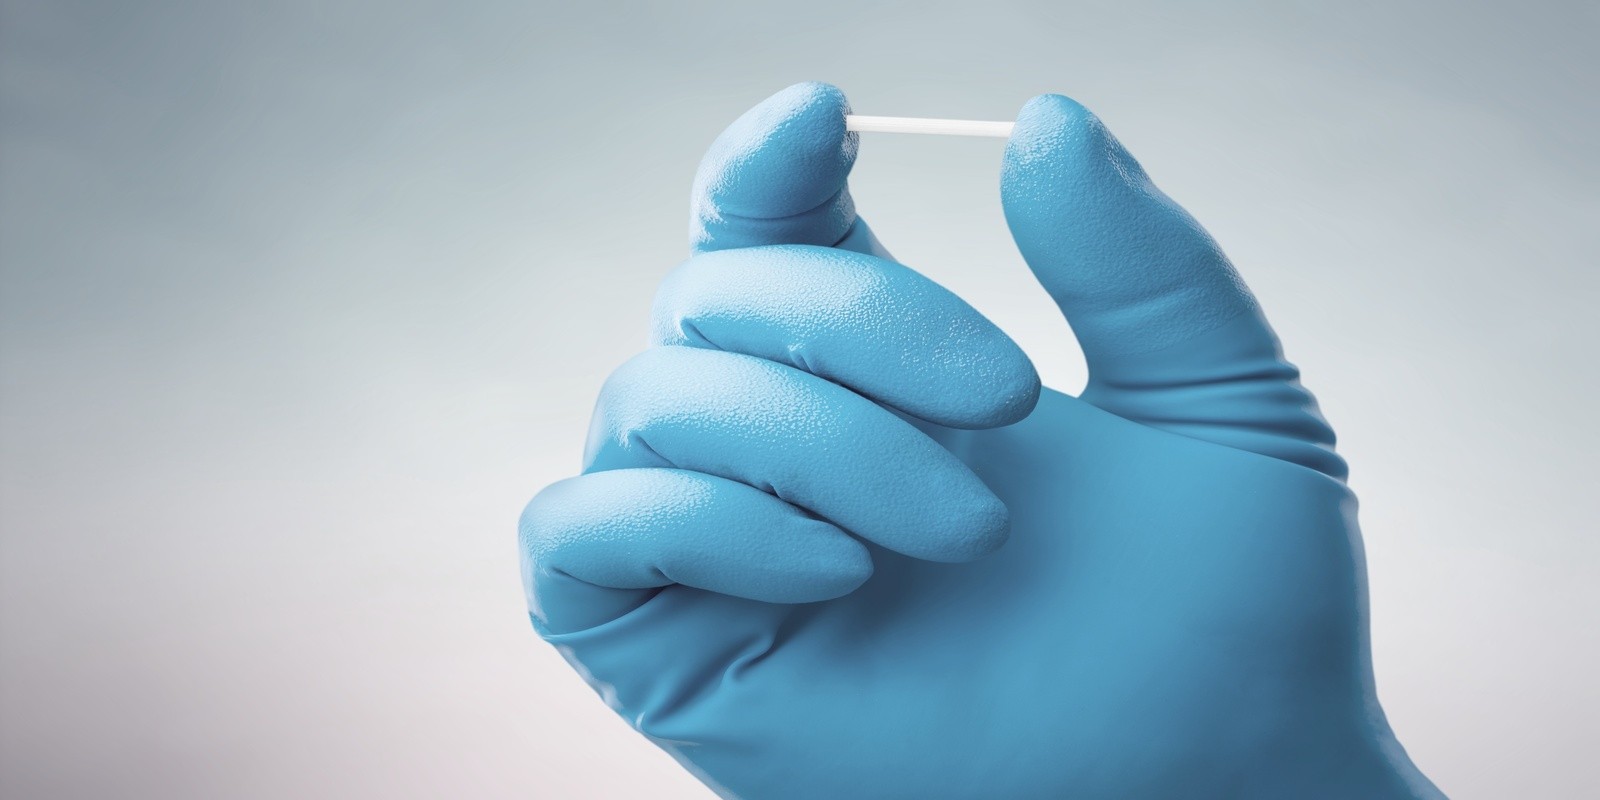 A hand holding a Nexplanon birth control arm implant